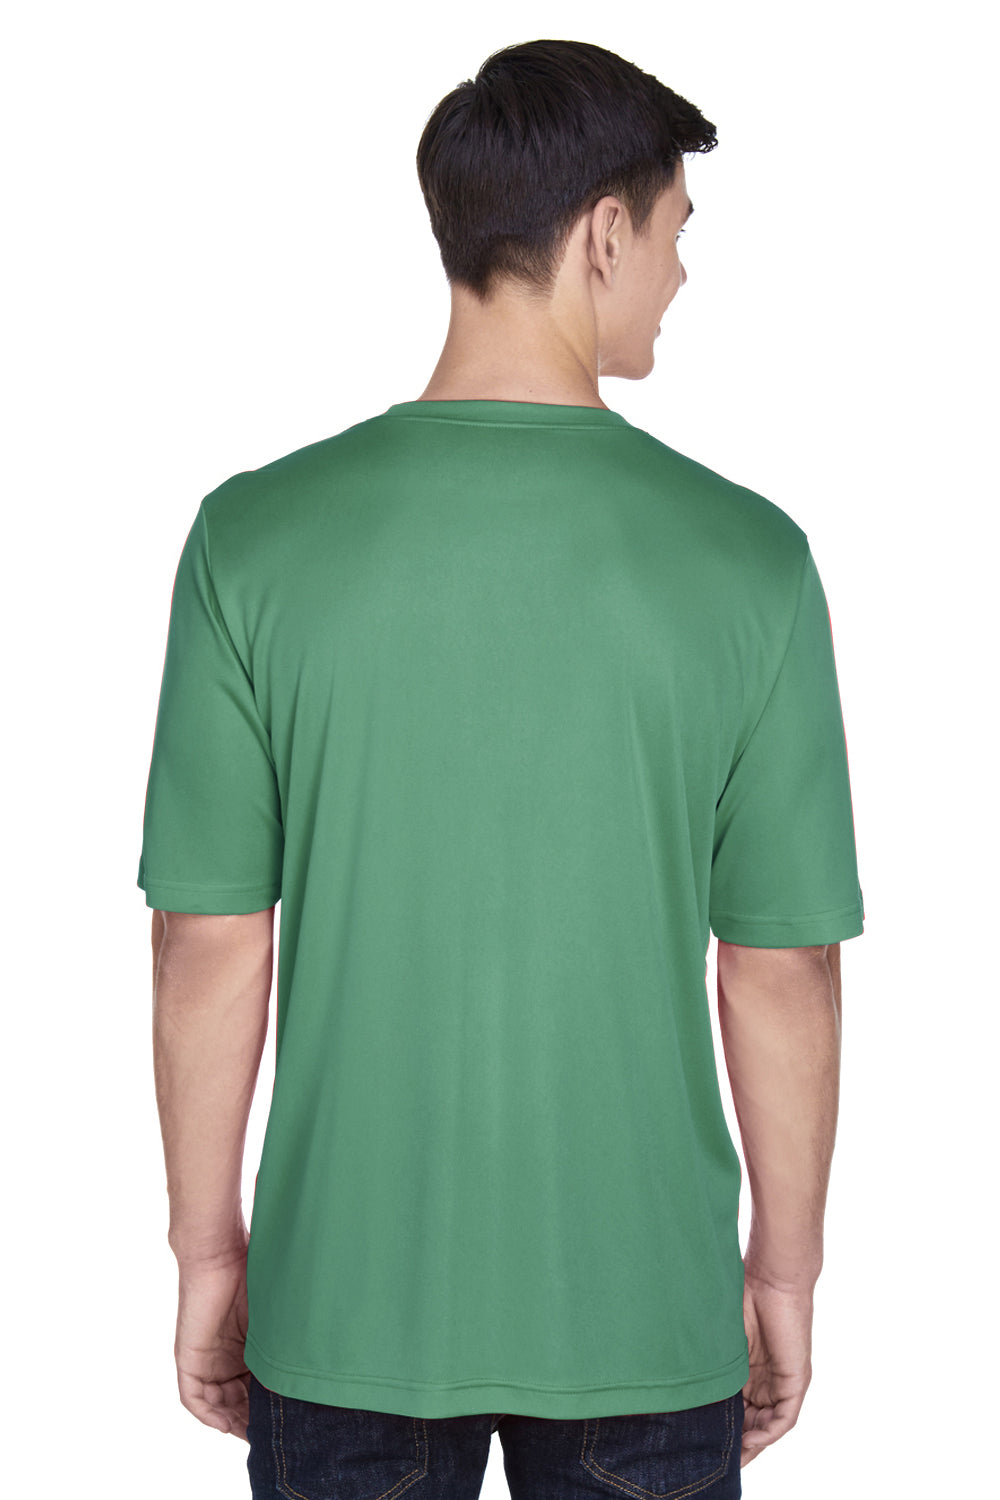 Team 365 TT11 Mens Zone Performance Moisture Wicking Short Sleeve Crewneck T-Shirt Dark Green Back